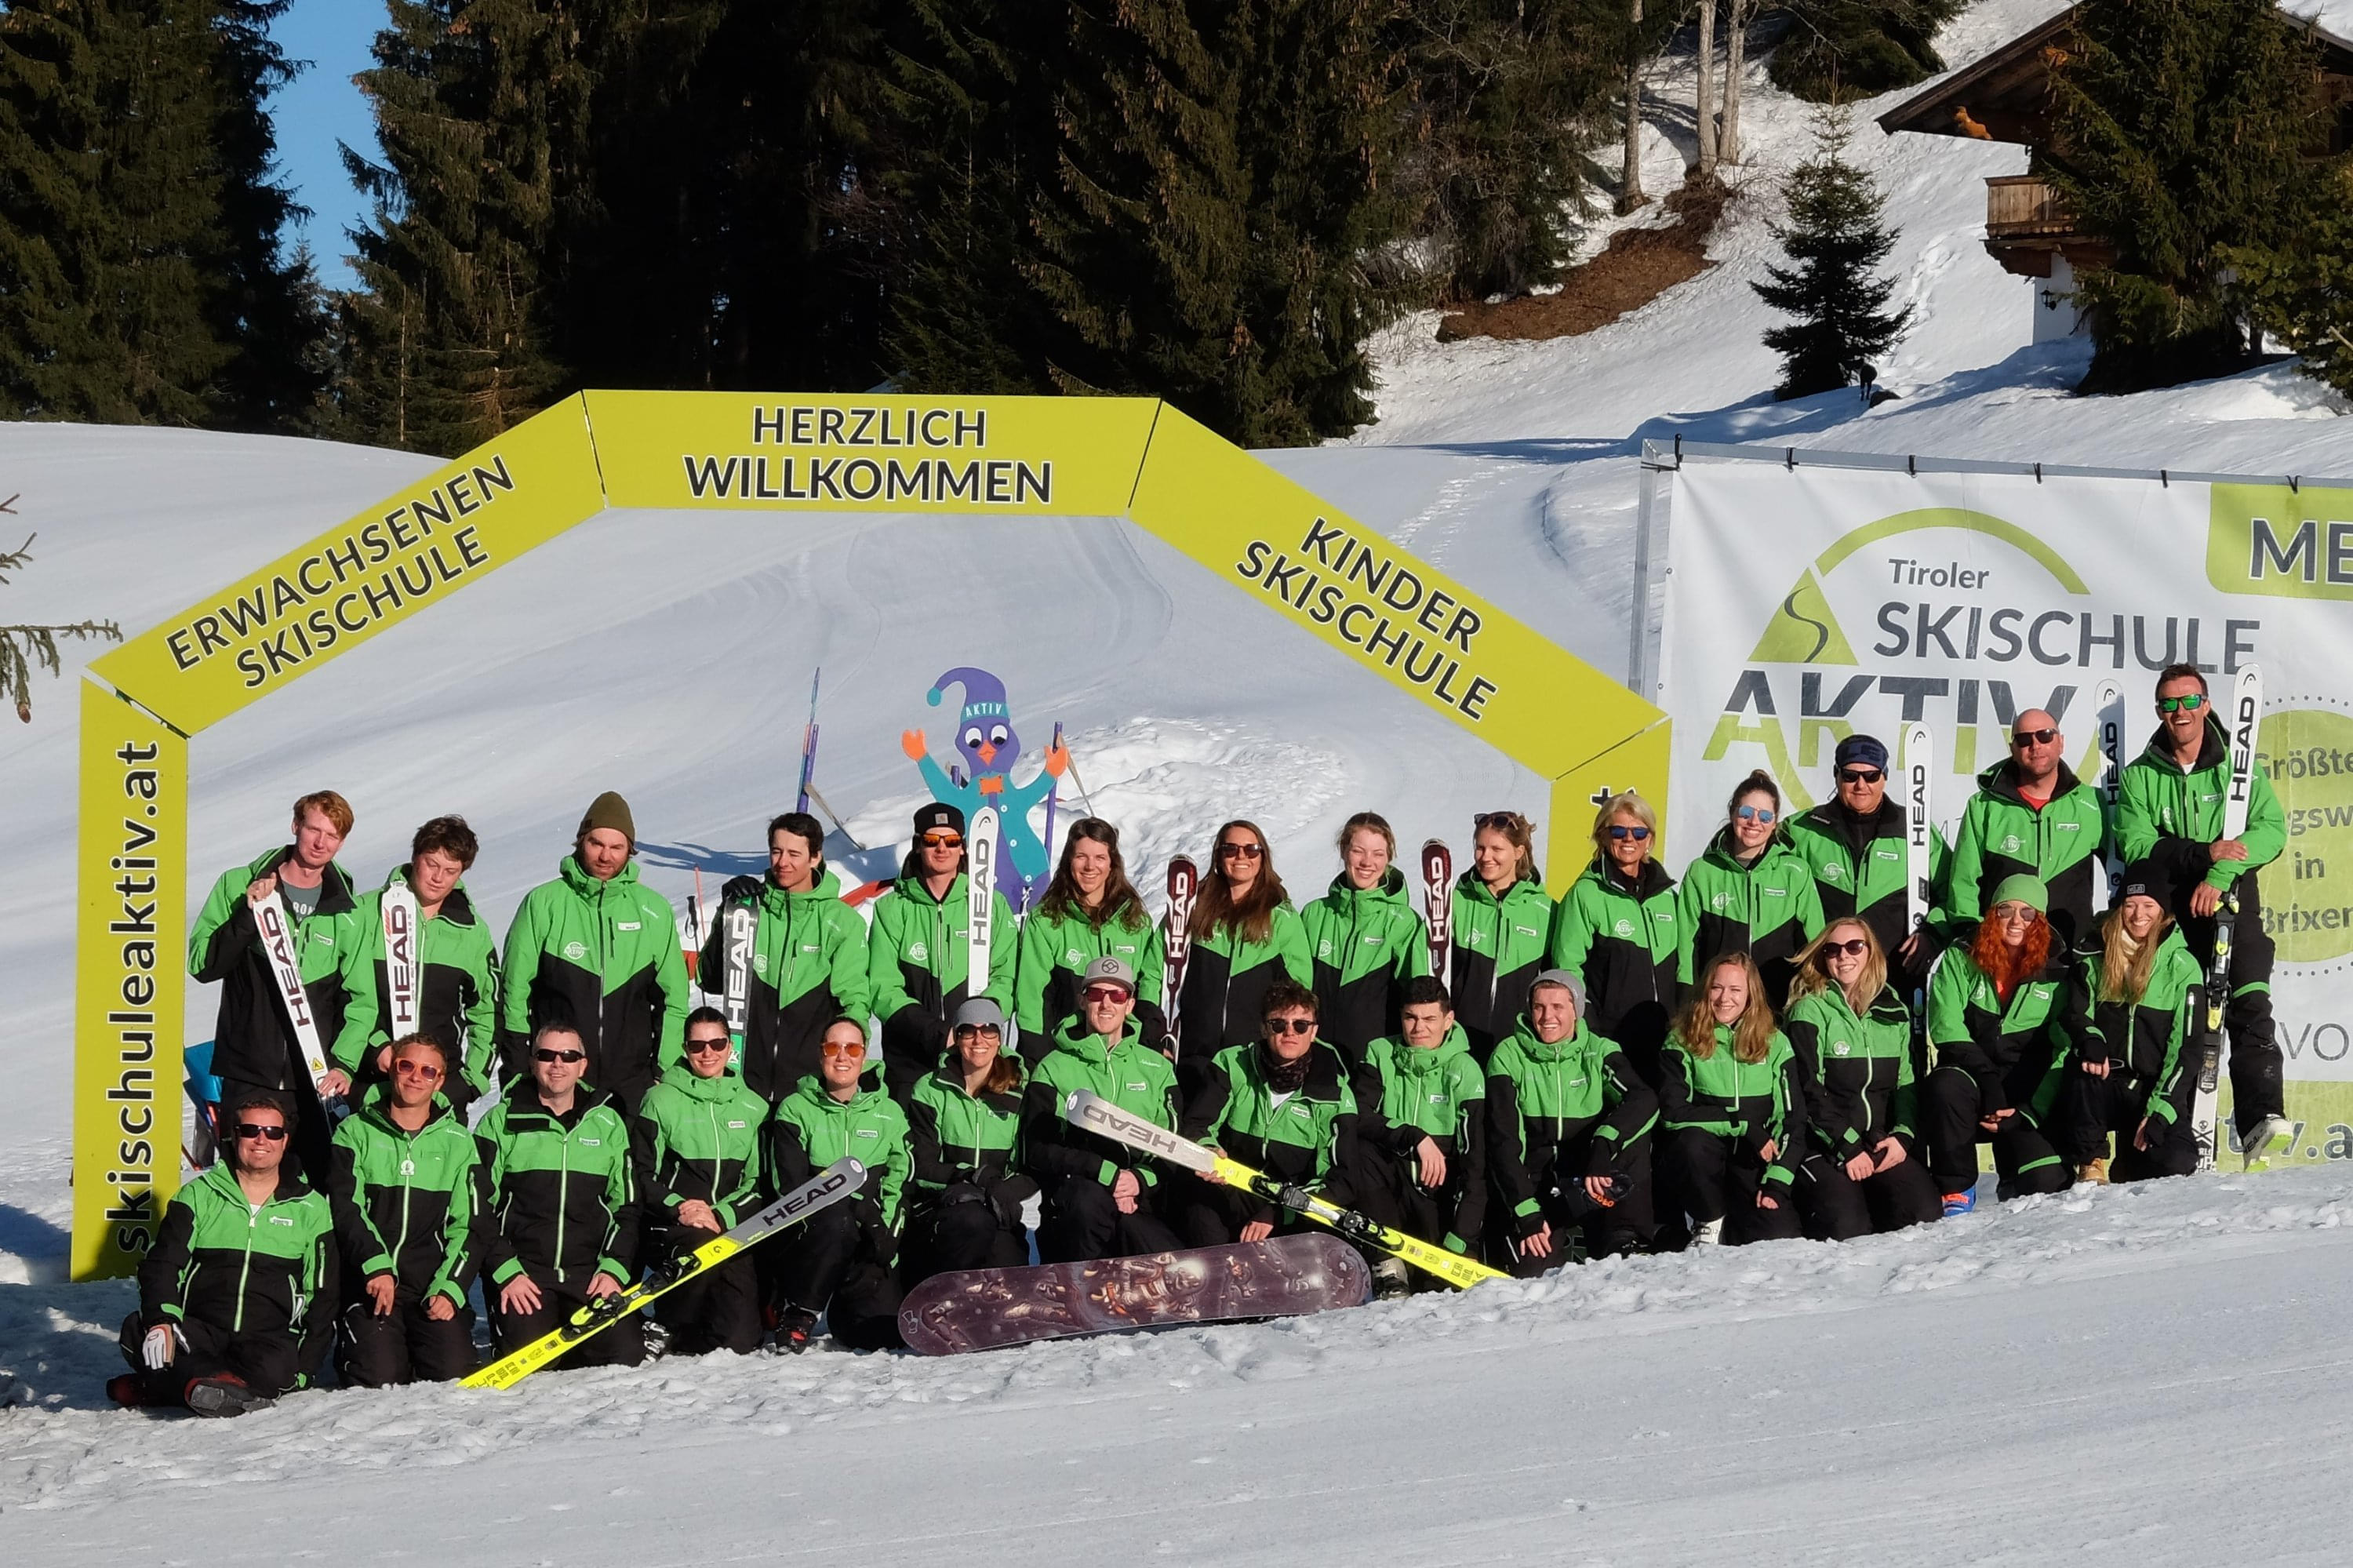 team ski school aktiv